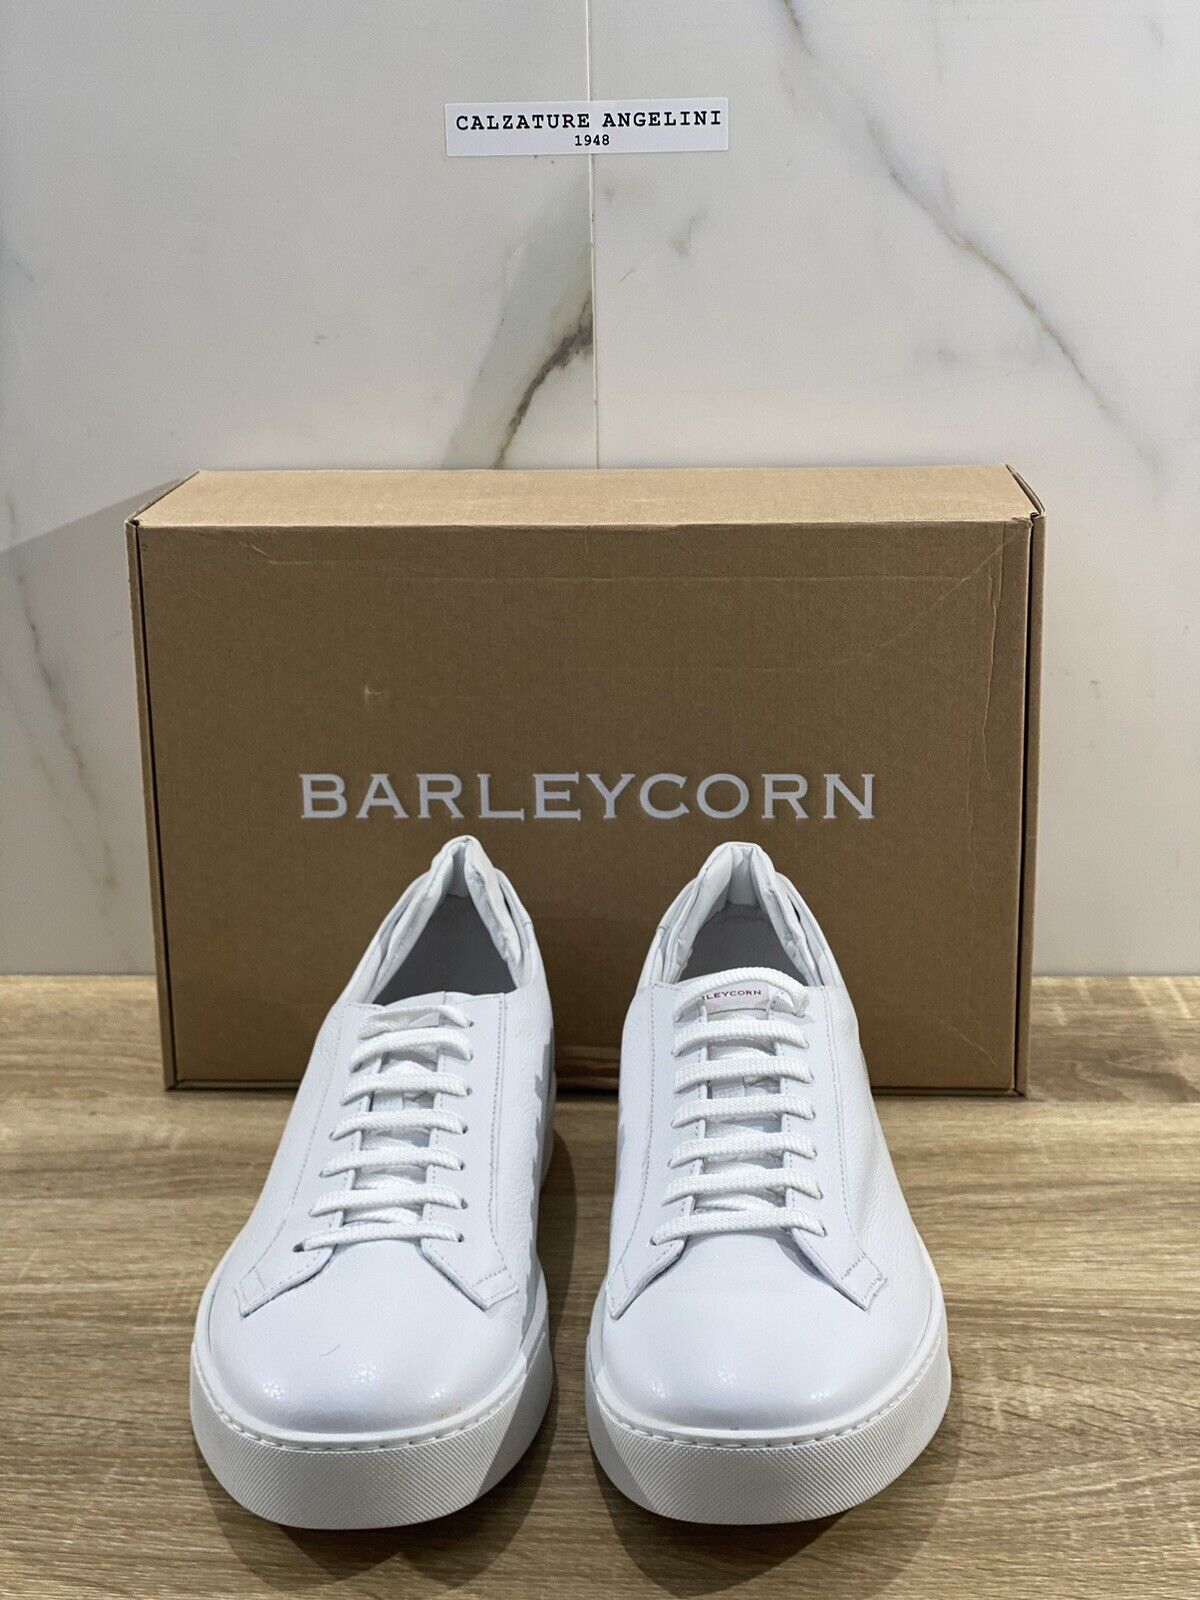 Barleycorn Sneaker Uomo Lord In Pelle Bianca Casual Men Shoes 45